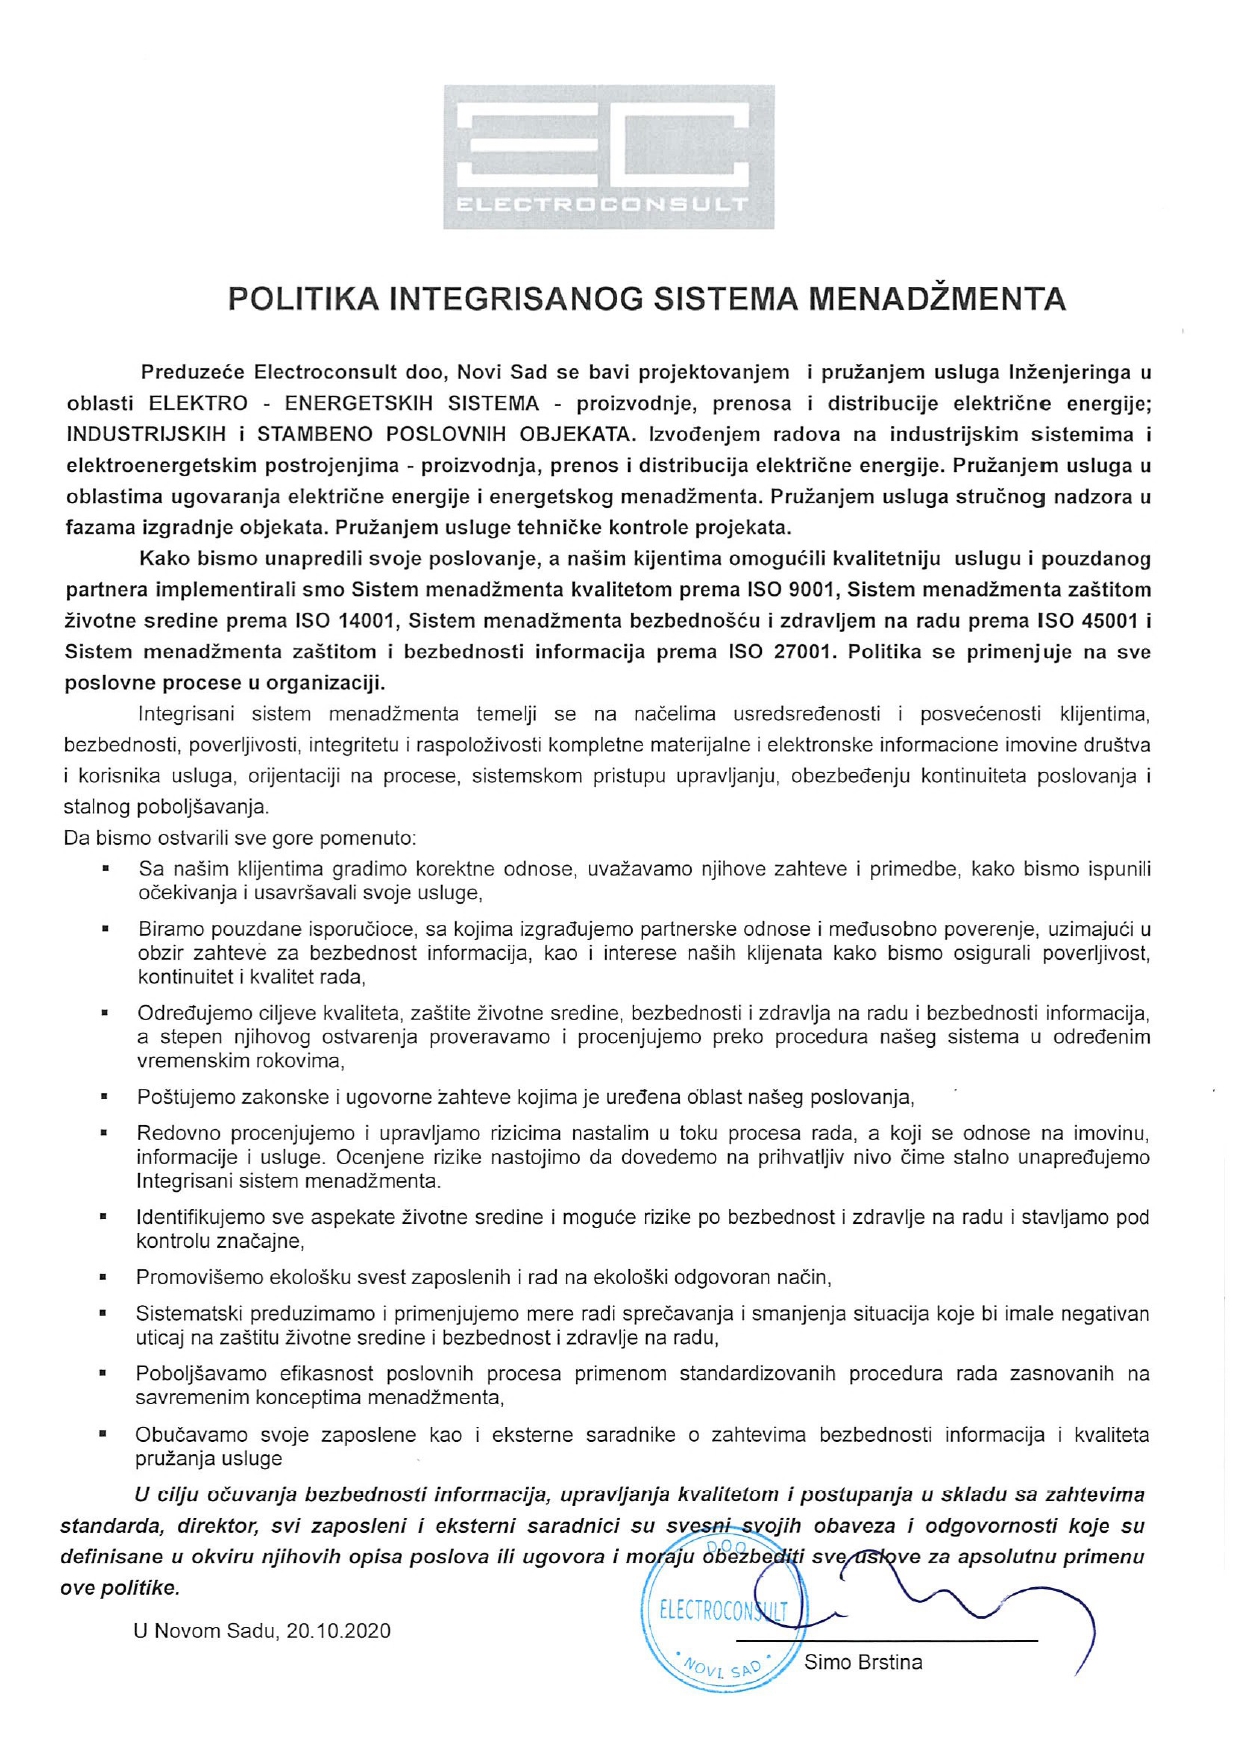 POLITIKA IMS 20.10.2020_page-0001